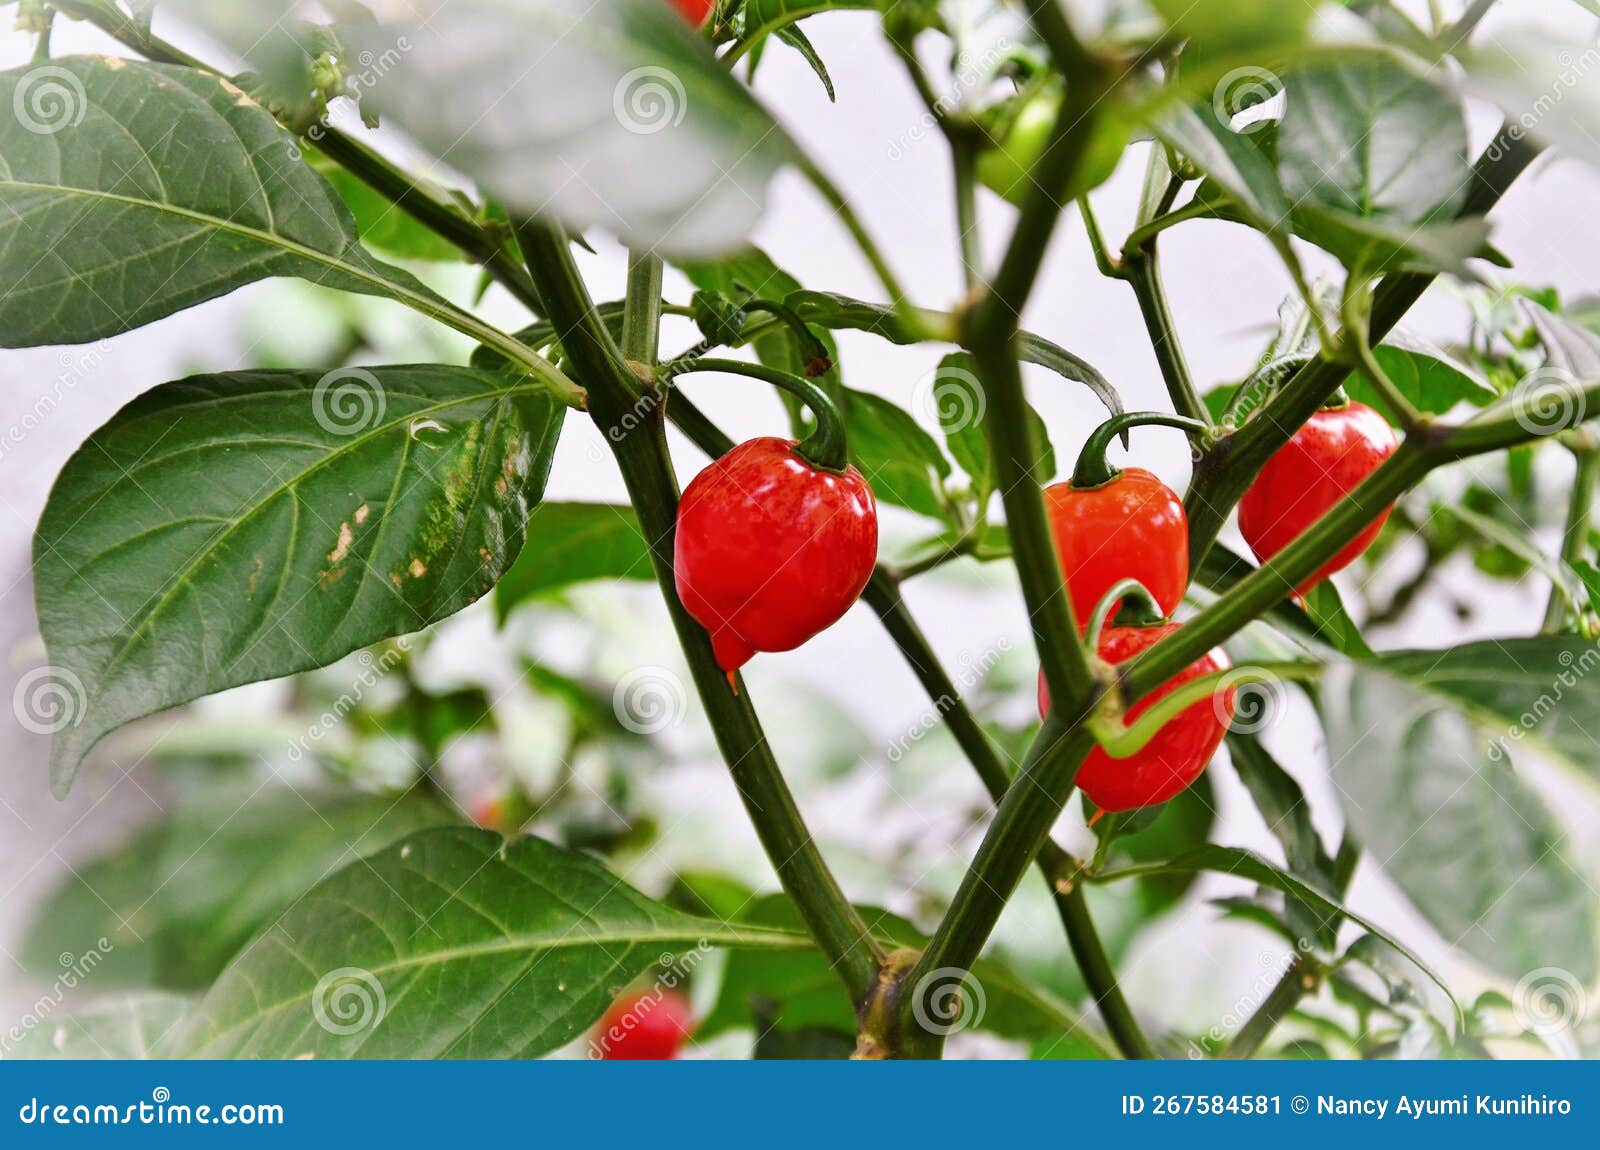 ripe capsicum chinense peppers in the backyard